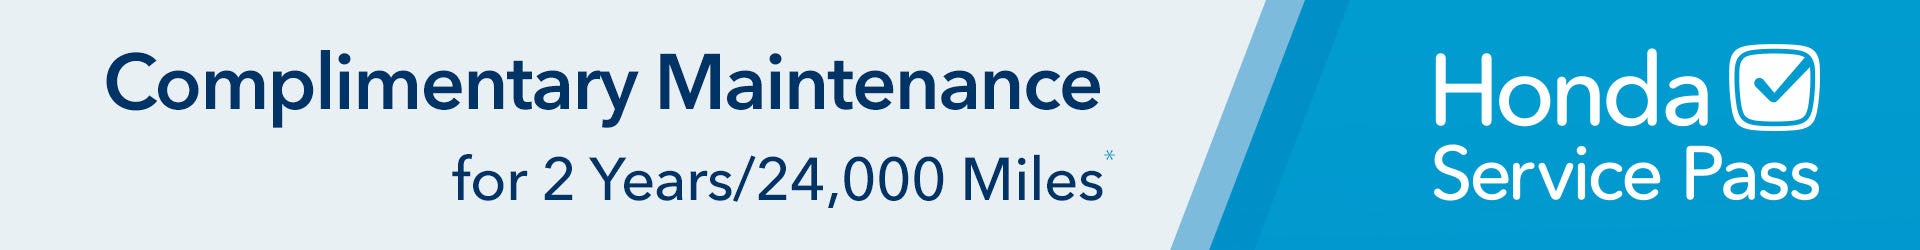 Complimentary Maintenance for 2 years / 24,000 Miles Honda Service Pass | Route 22 Honda in Hillside NJ